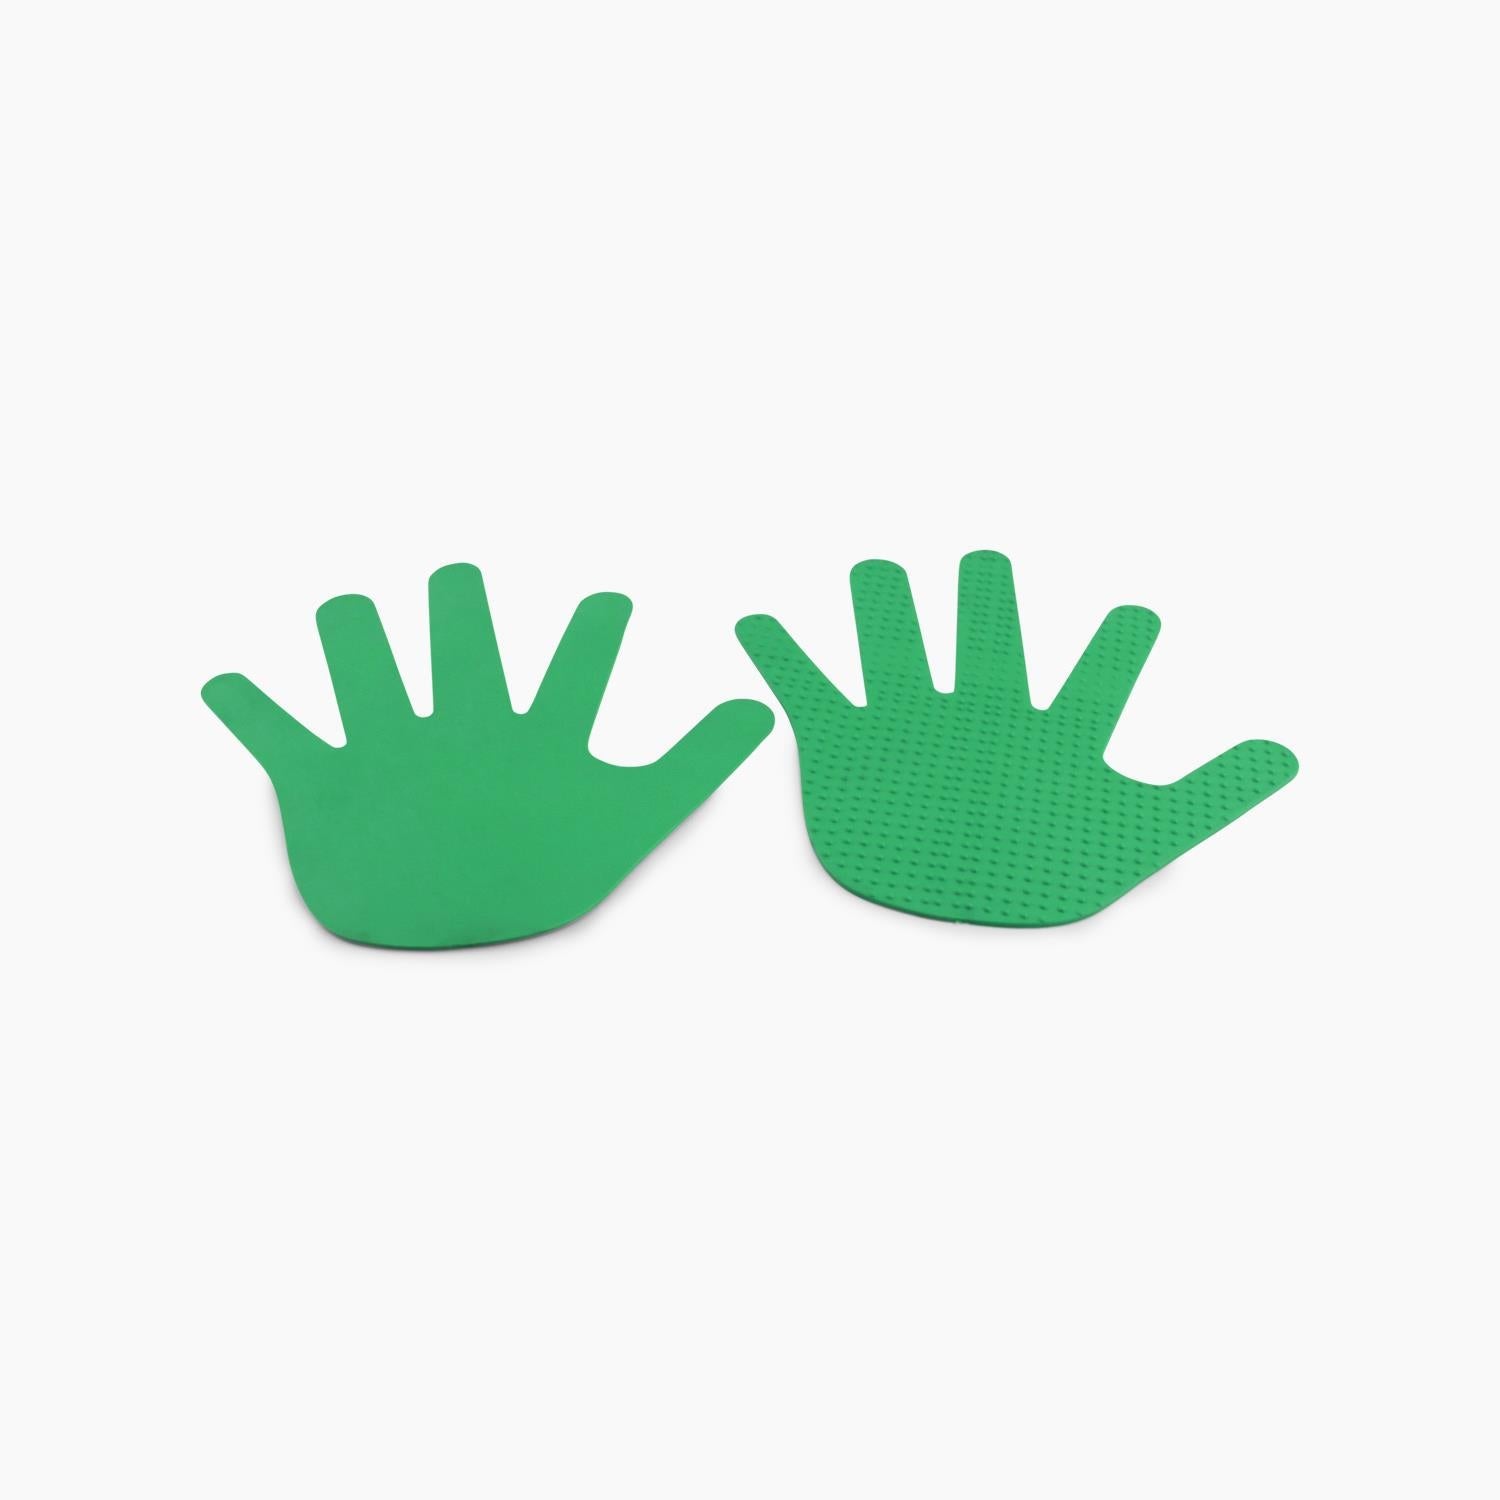 Buy Pair Of Rubber Hands-Splay (UK) Limited-Green-Splay UK Online